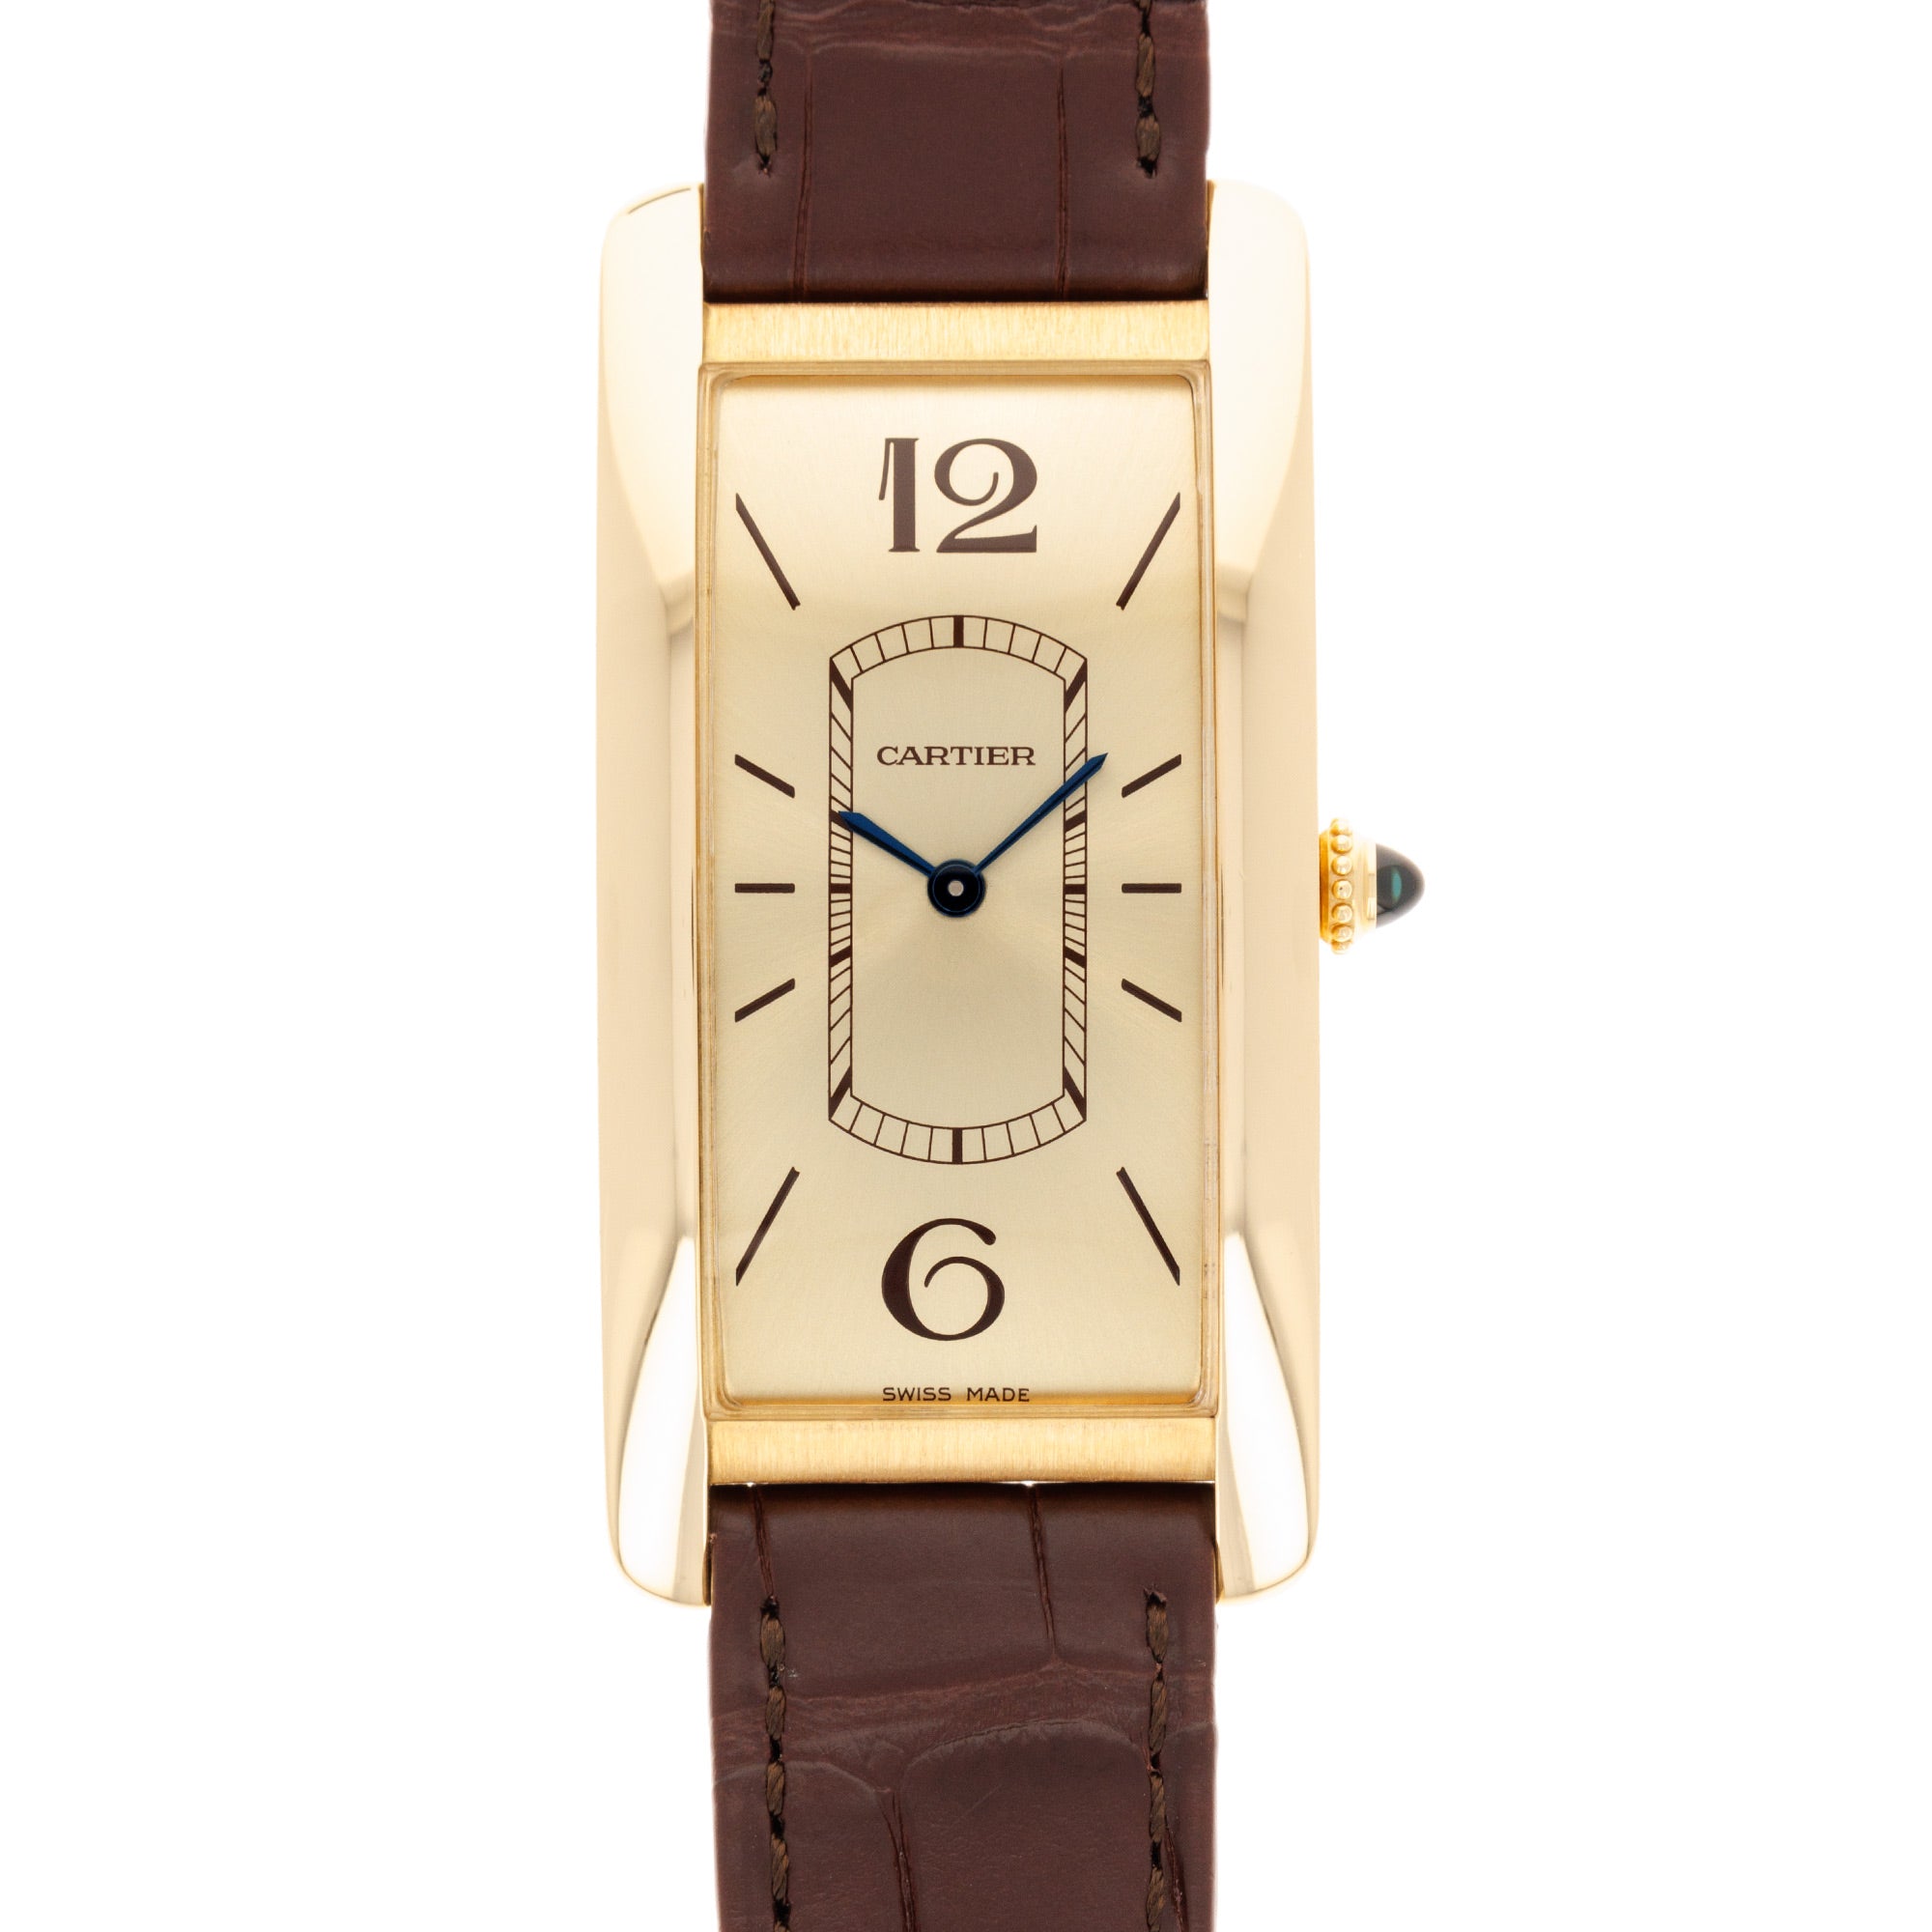 Cartier - Cartier Yellow Gold Tank Cintree Watch Ref. 4123 - The Keystone Watches